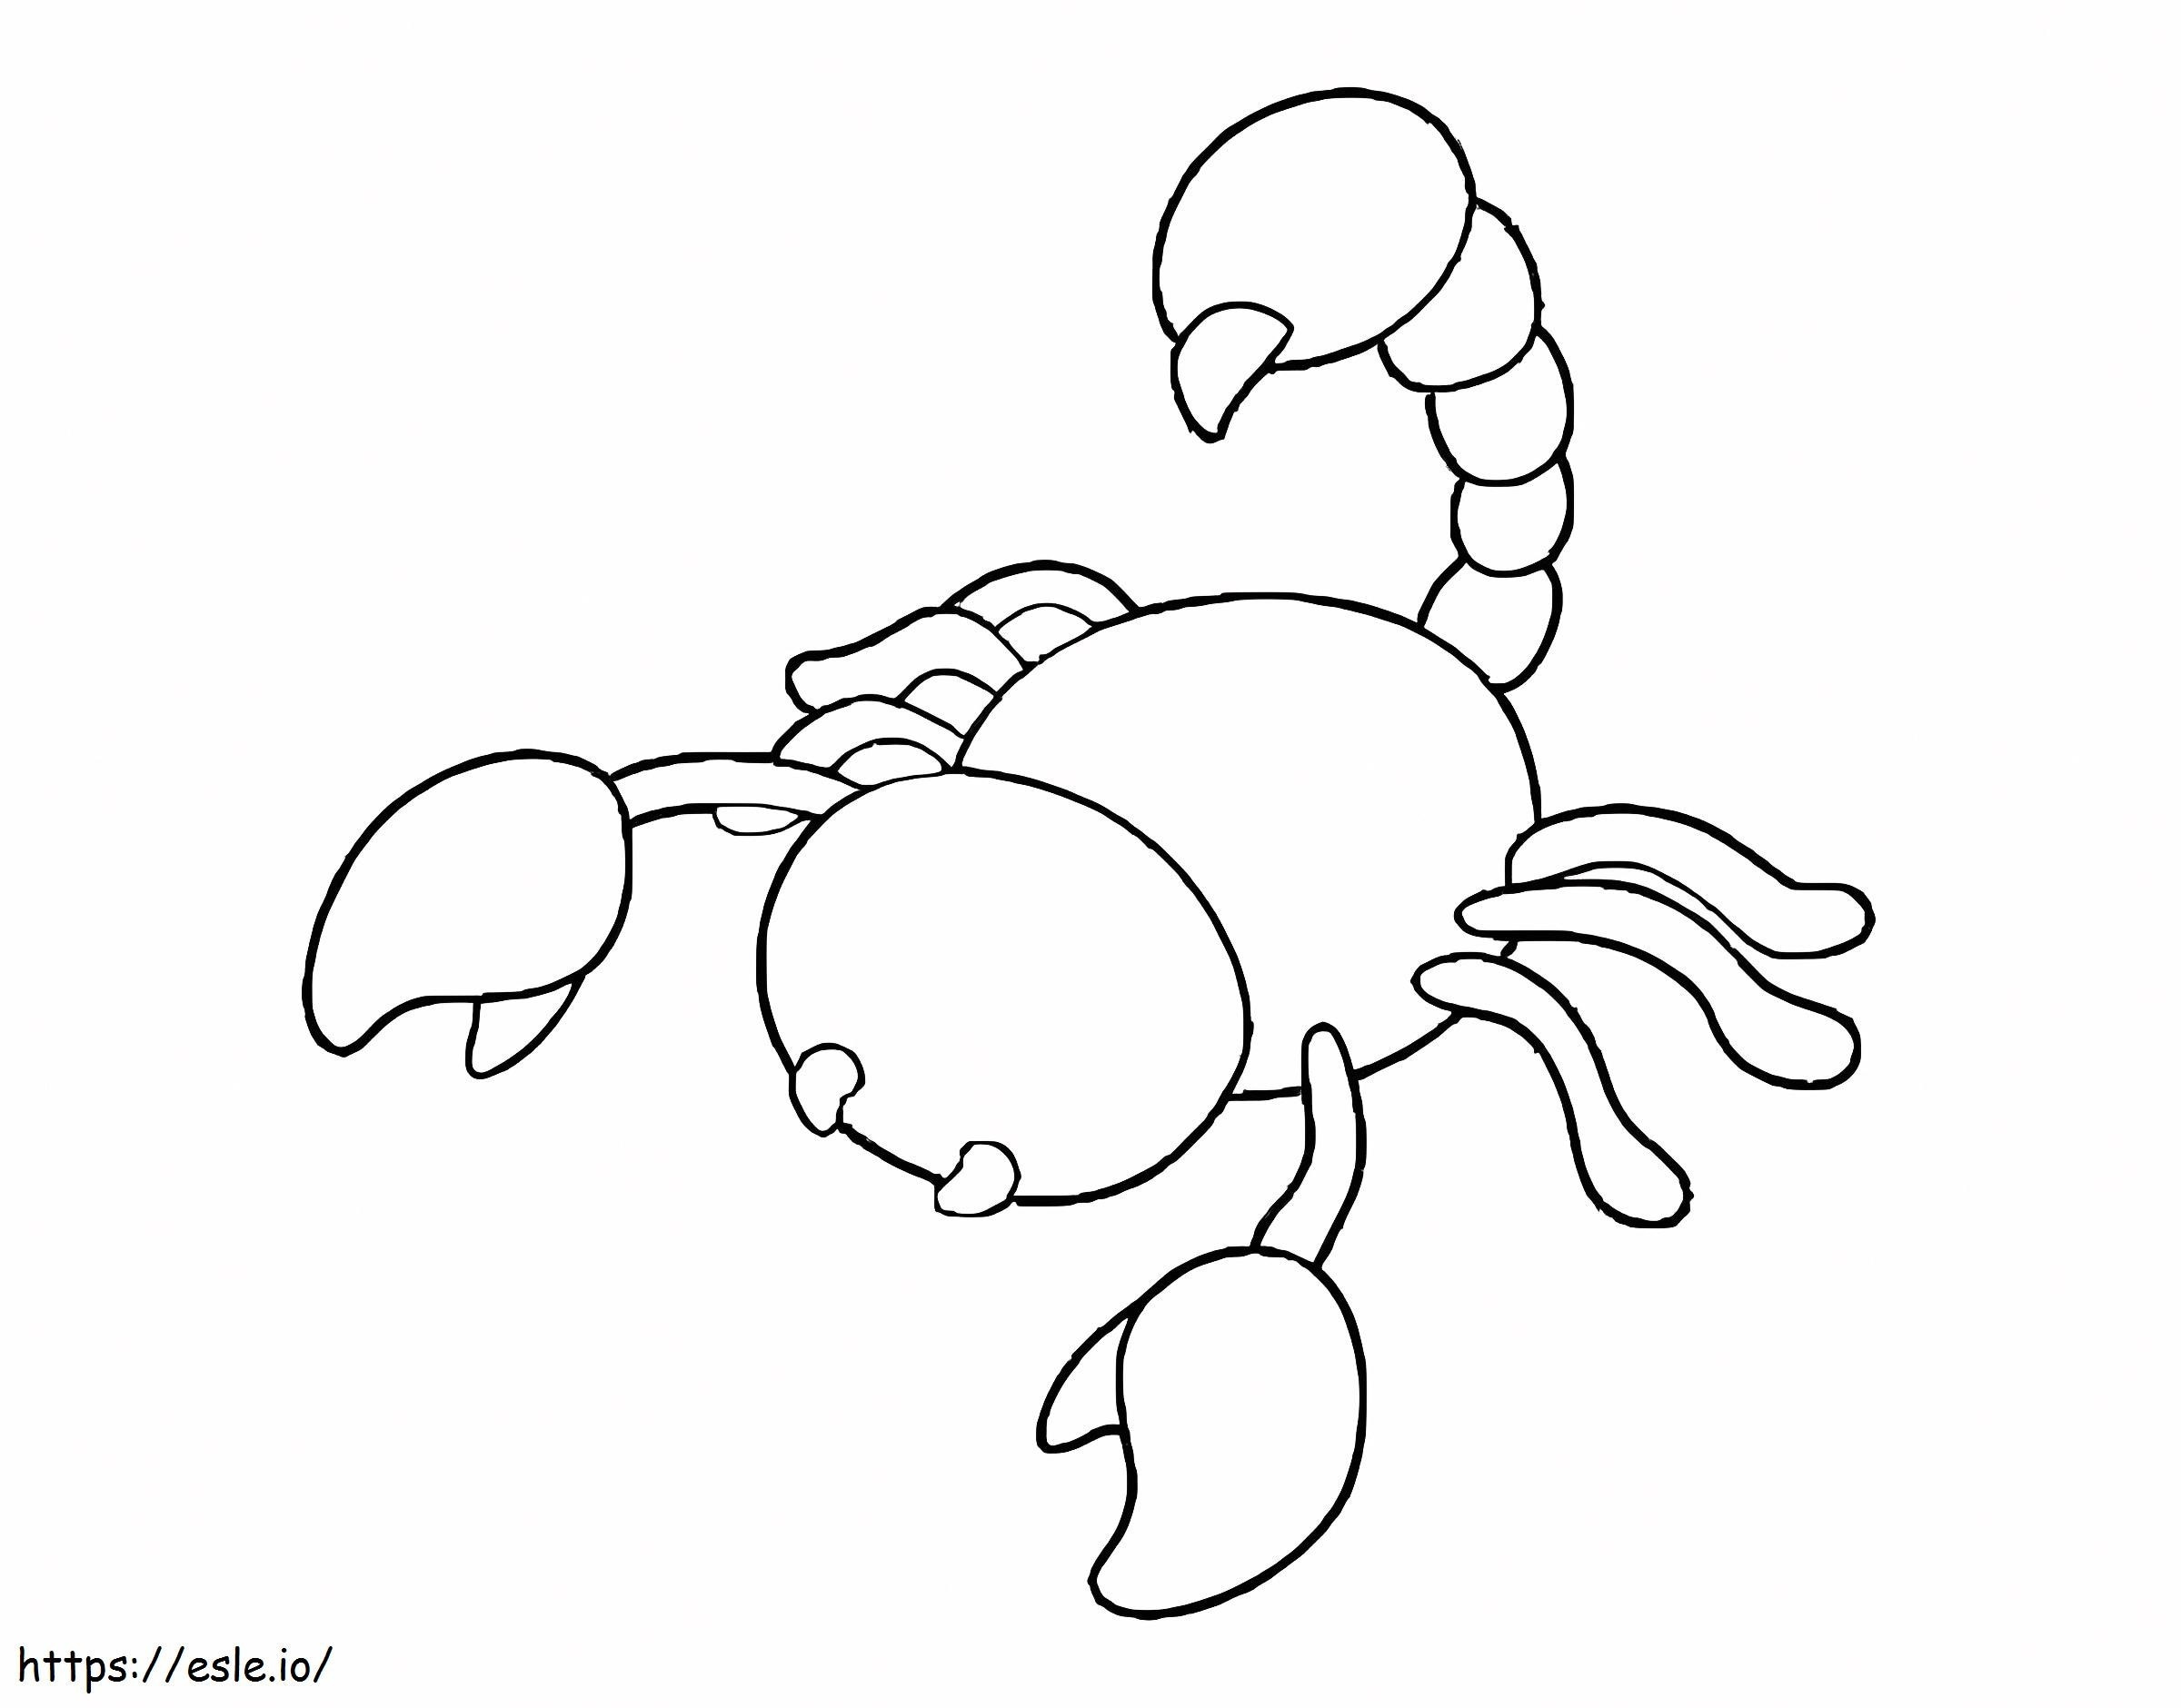 Coloriage Scorpion simple à imprimer dessin